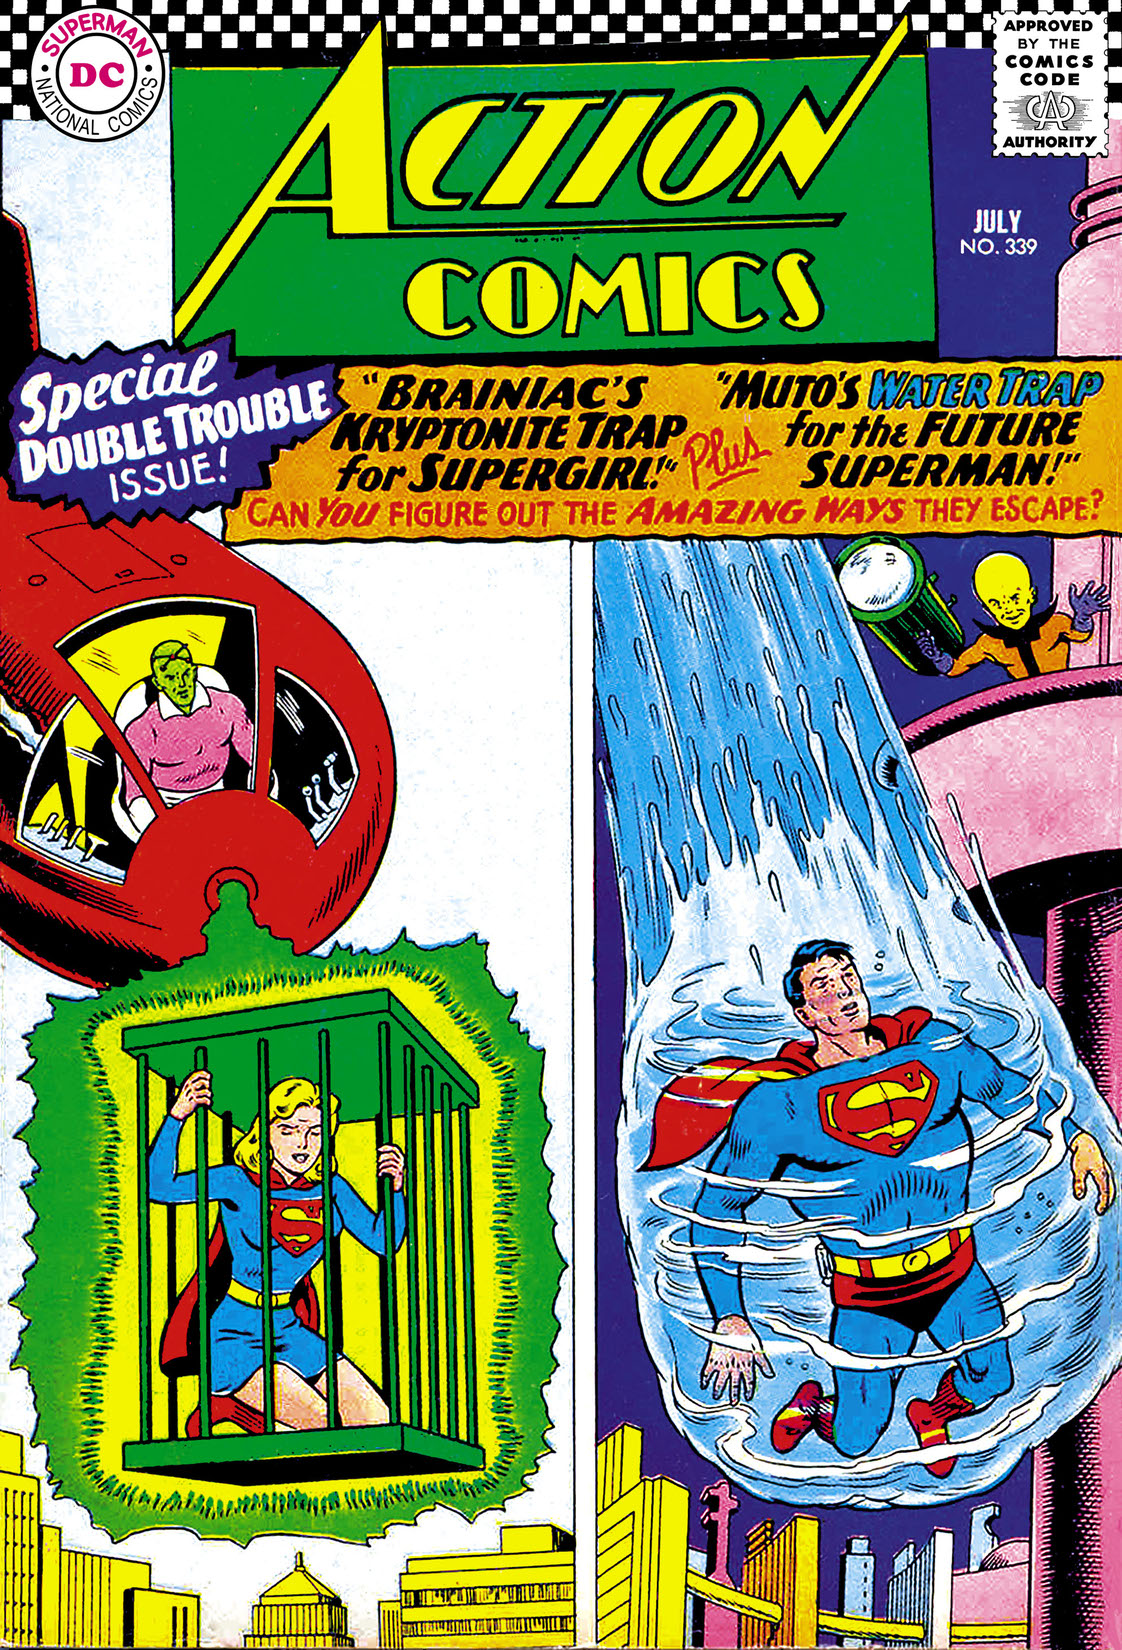 Action Comics (1938-2011) #339 preview images